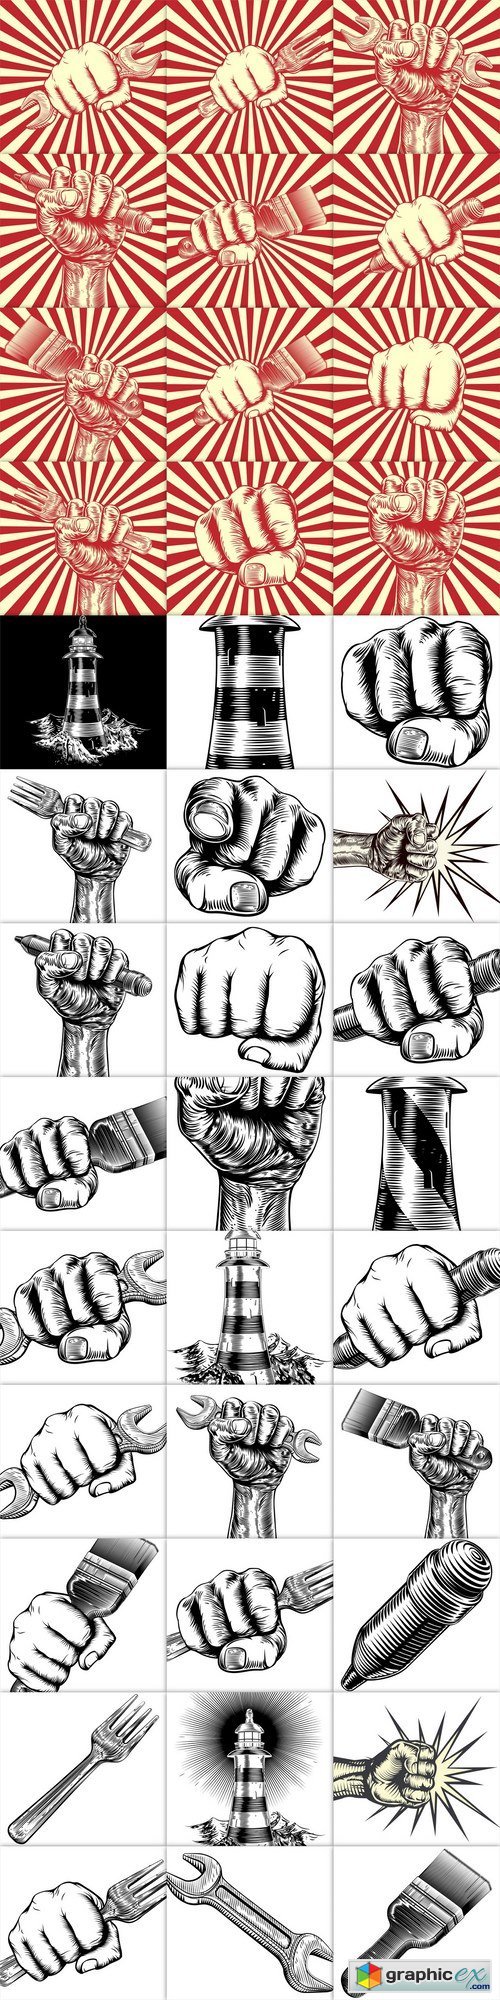 Propaganda Woodcut Fist Hand Holding Pencil